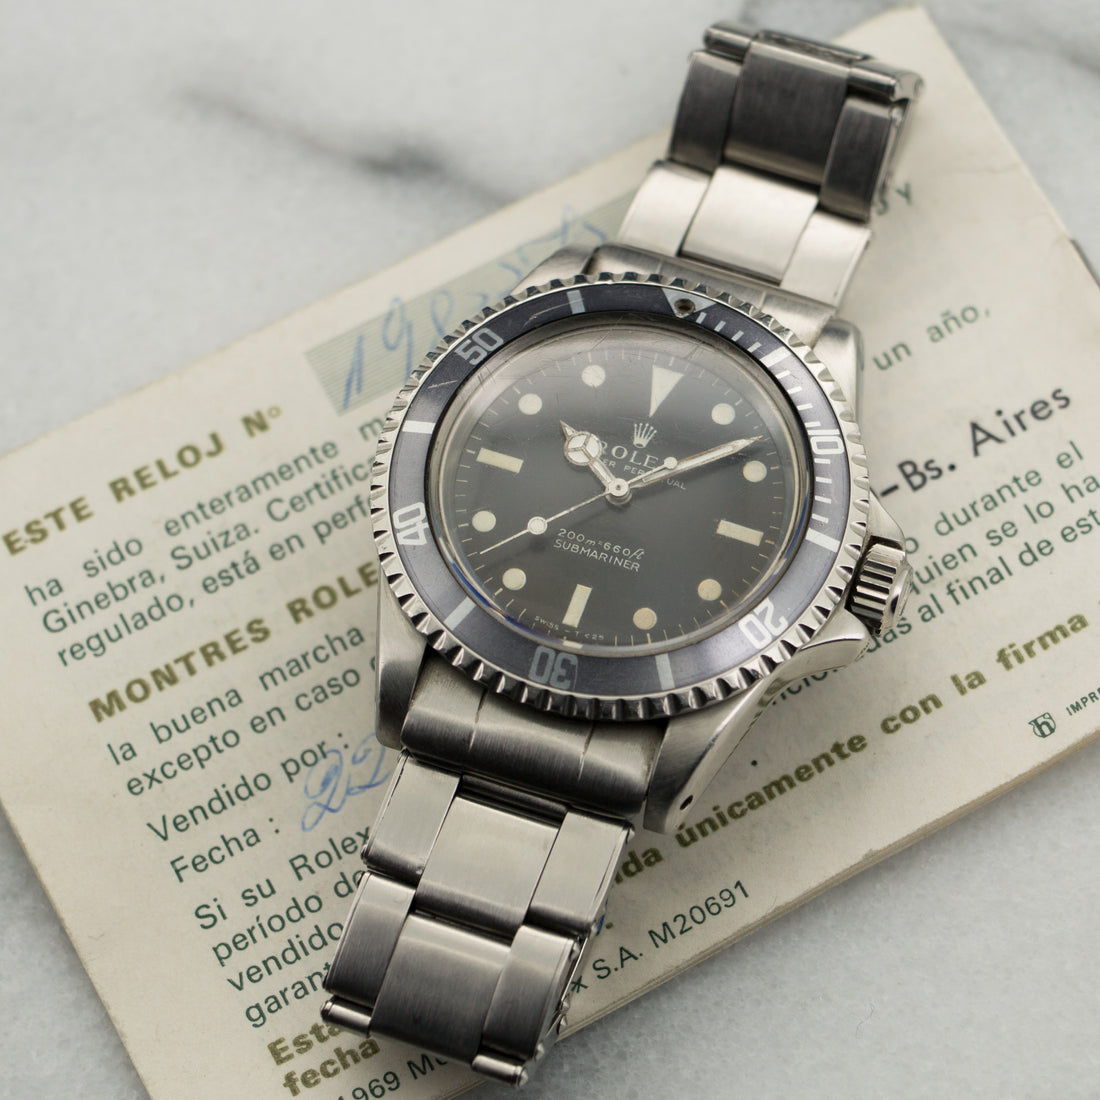 Rolex Steel Meters-First Submariner Watch Ref. 5513 with Original Papers